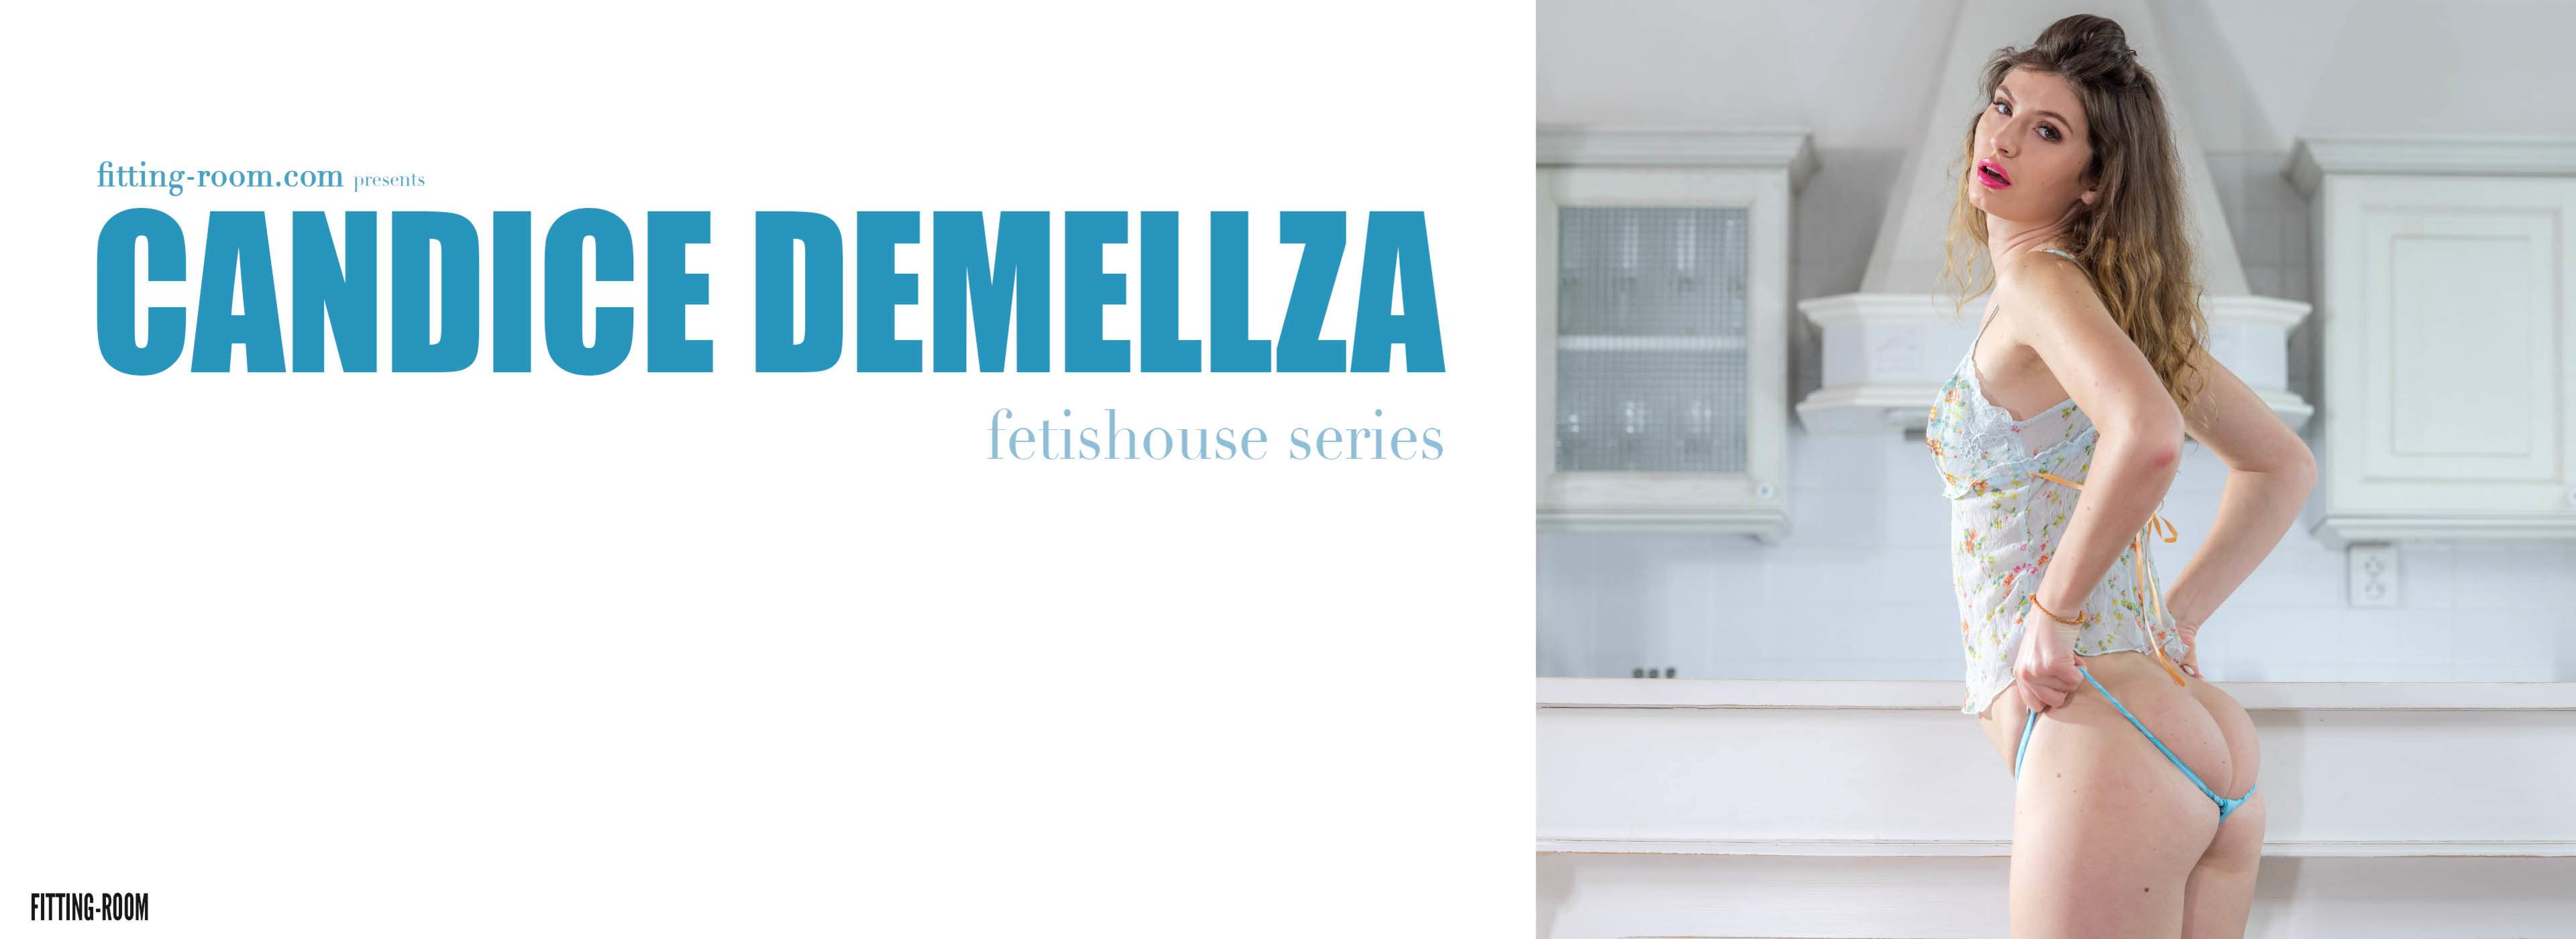 Candice Demellza | I Love Doing That